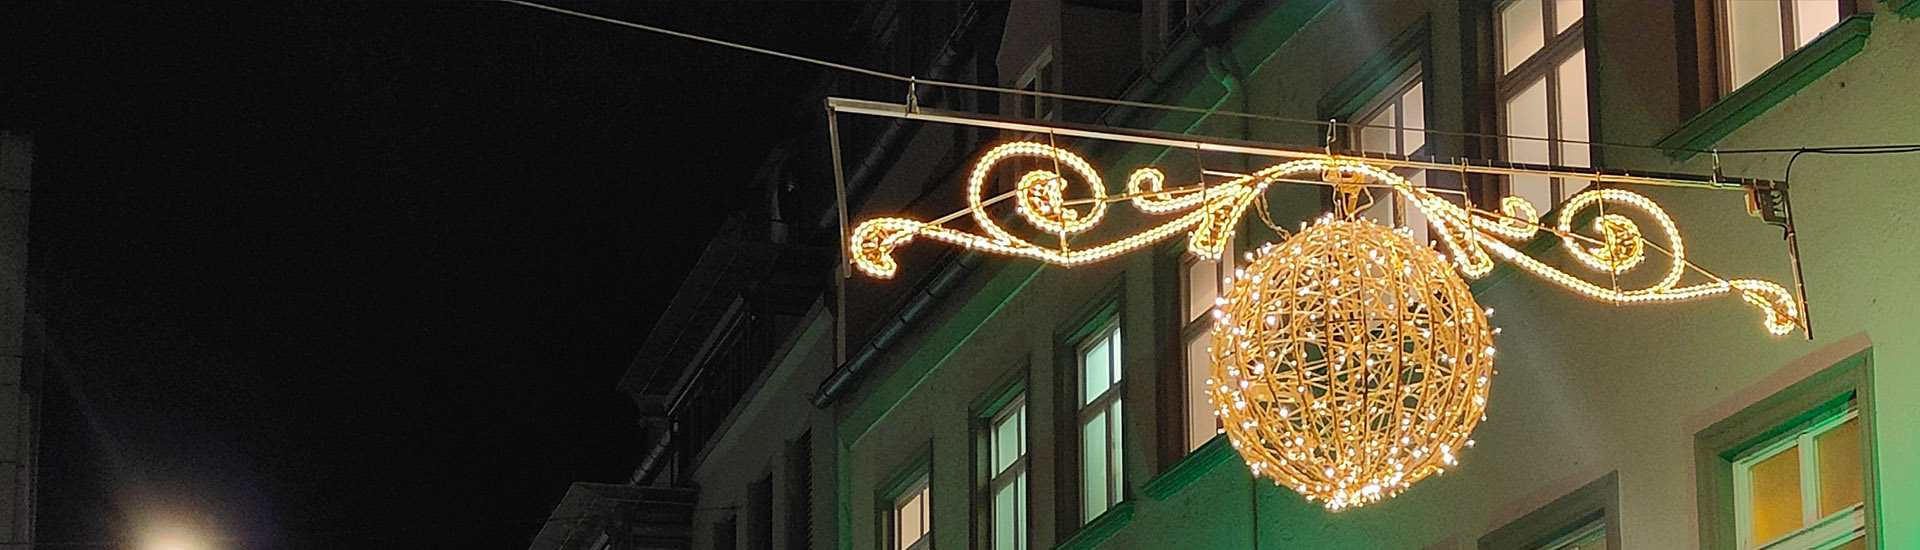 Beleuchtung Augsburg – Weihnachtsbeleuchtung, Lampions, Werbepylonen